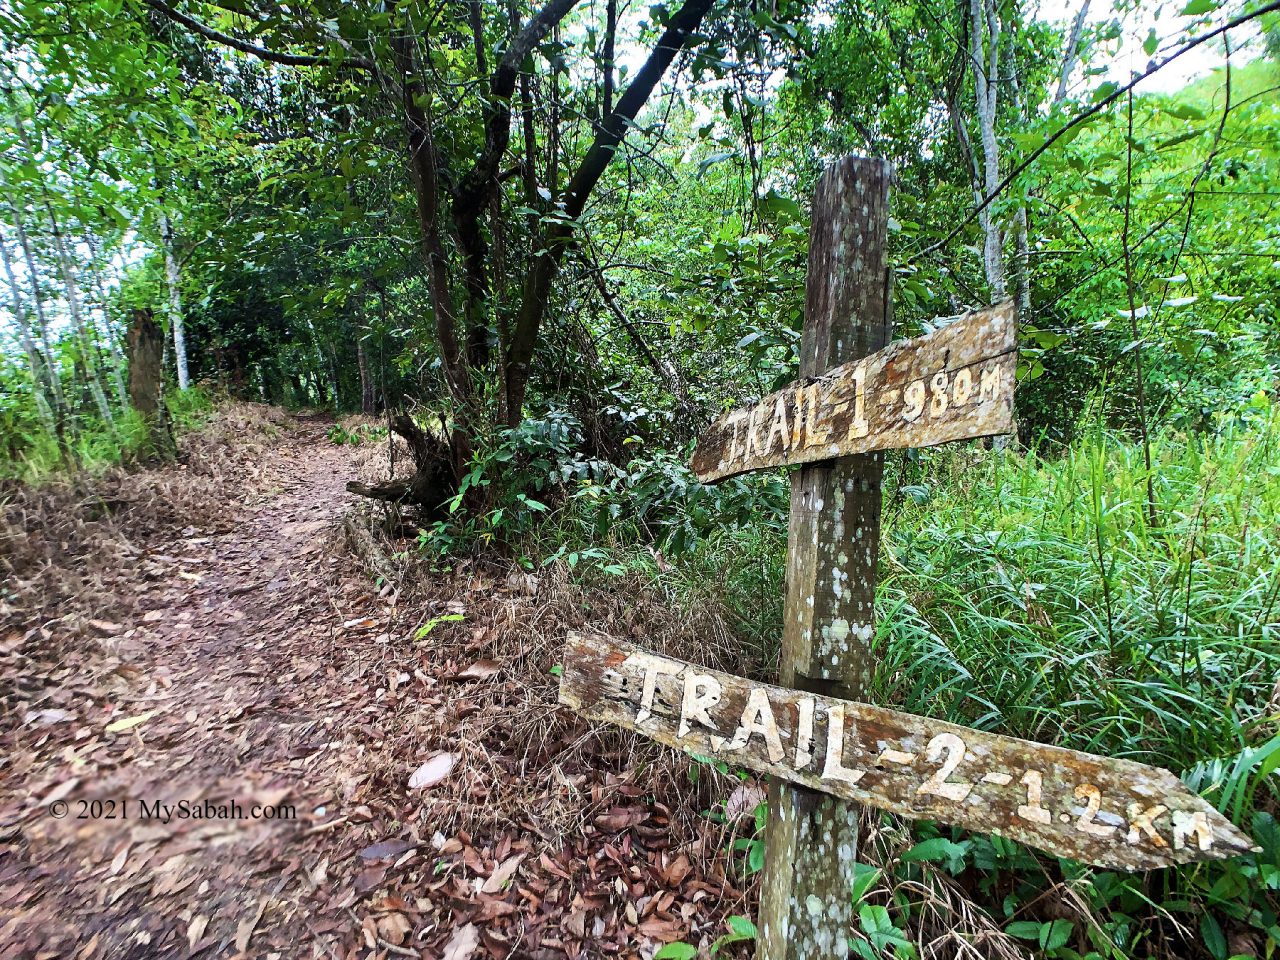 Trail mark of Nuluh Lapai